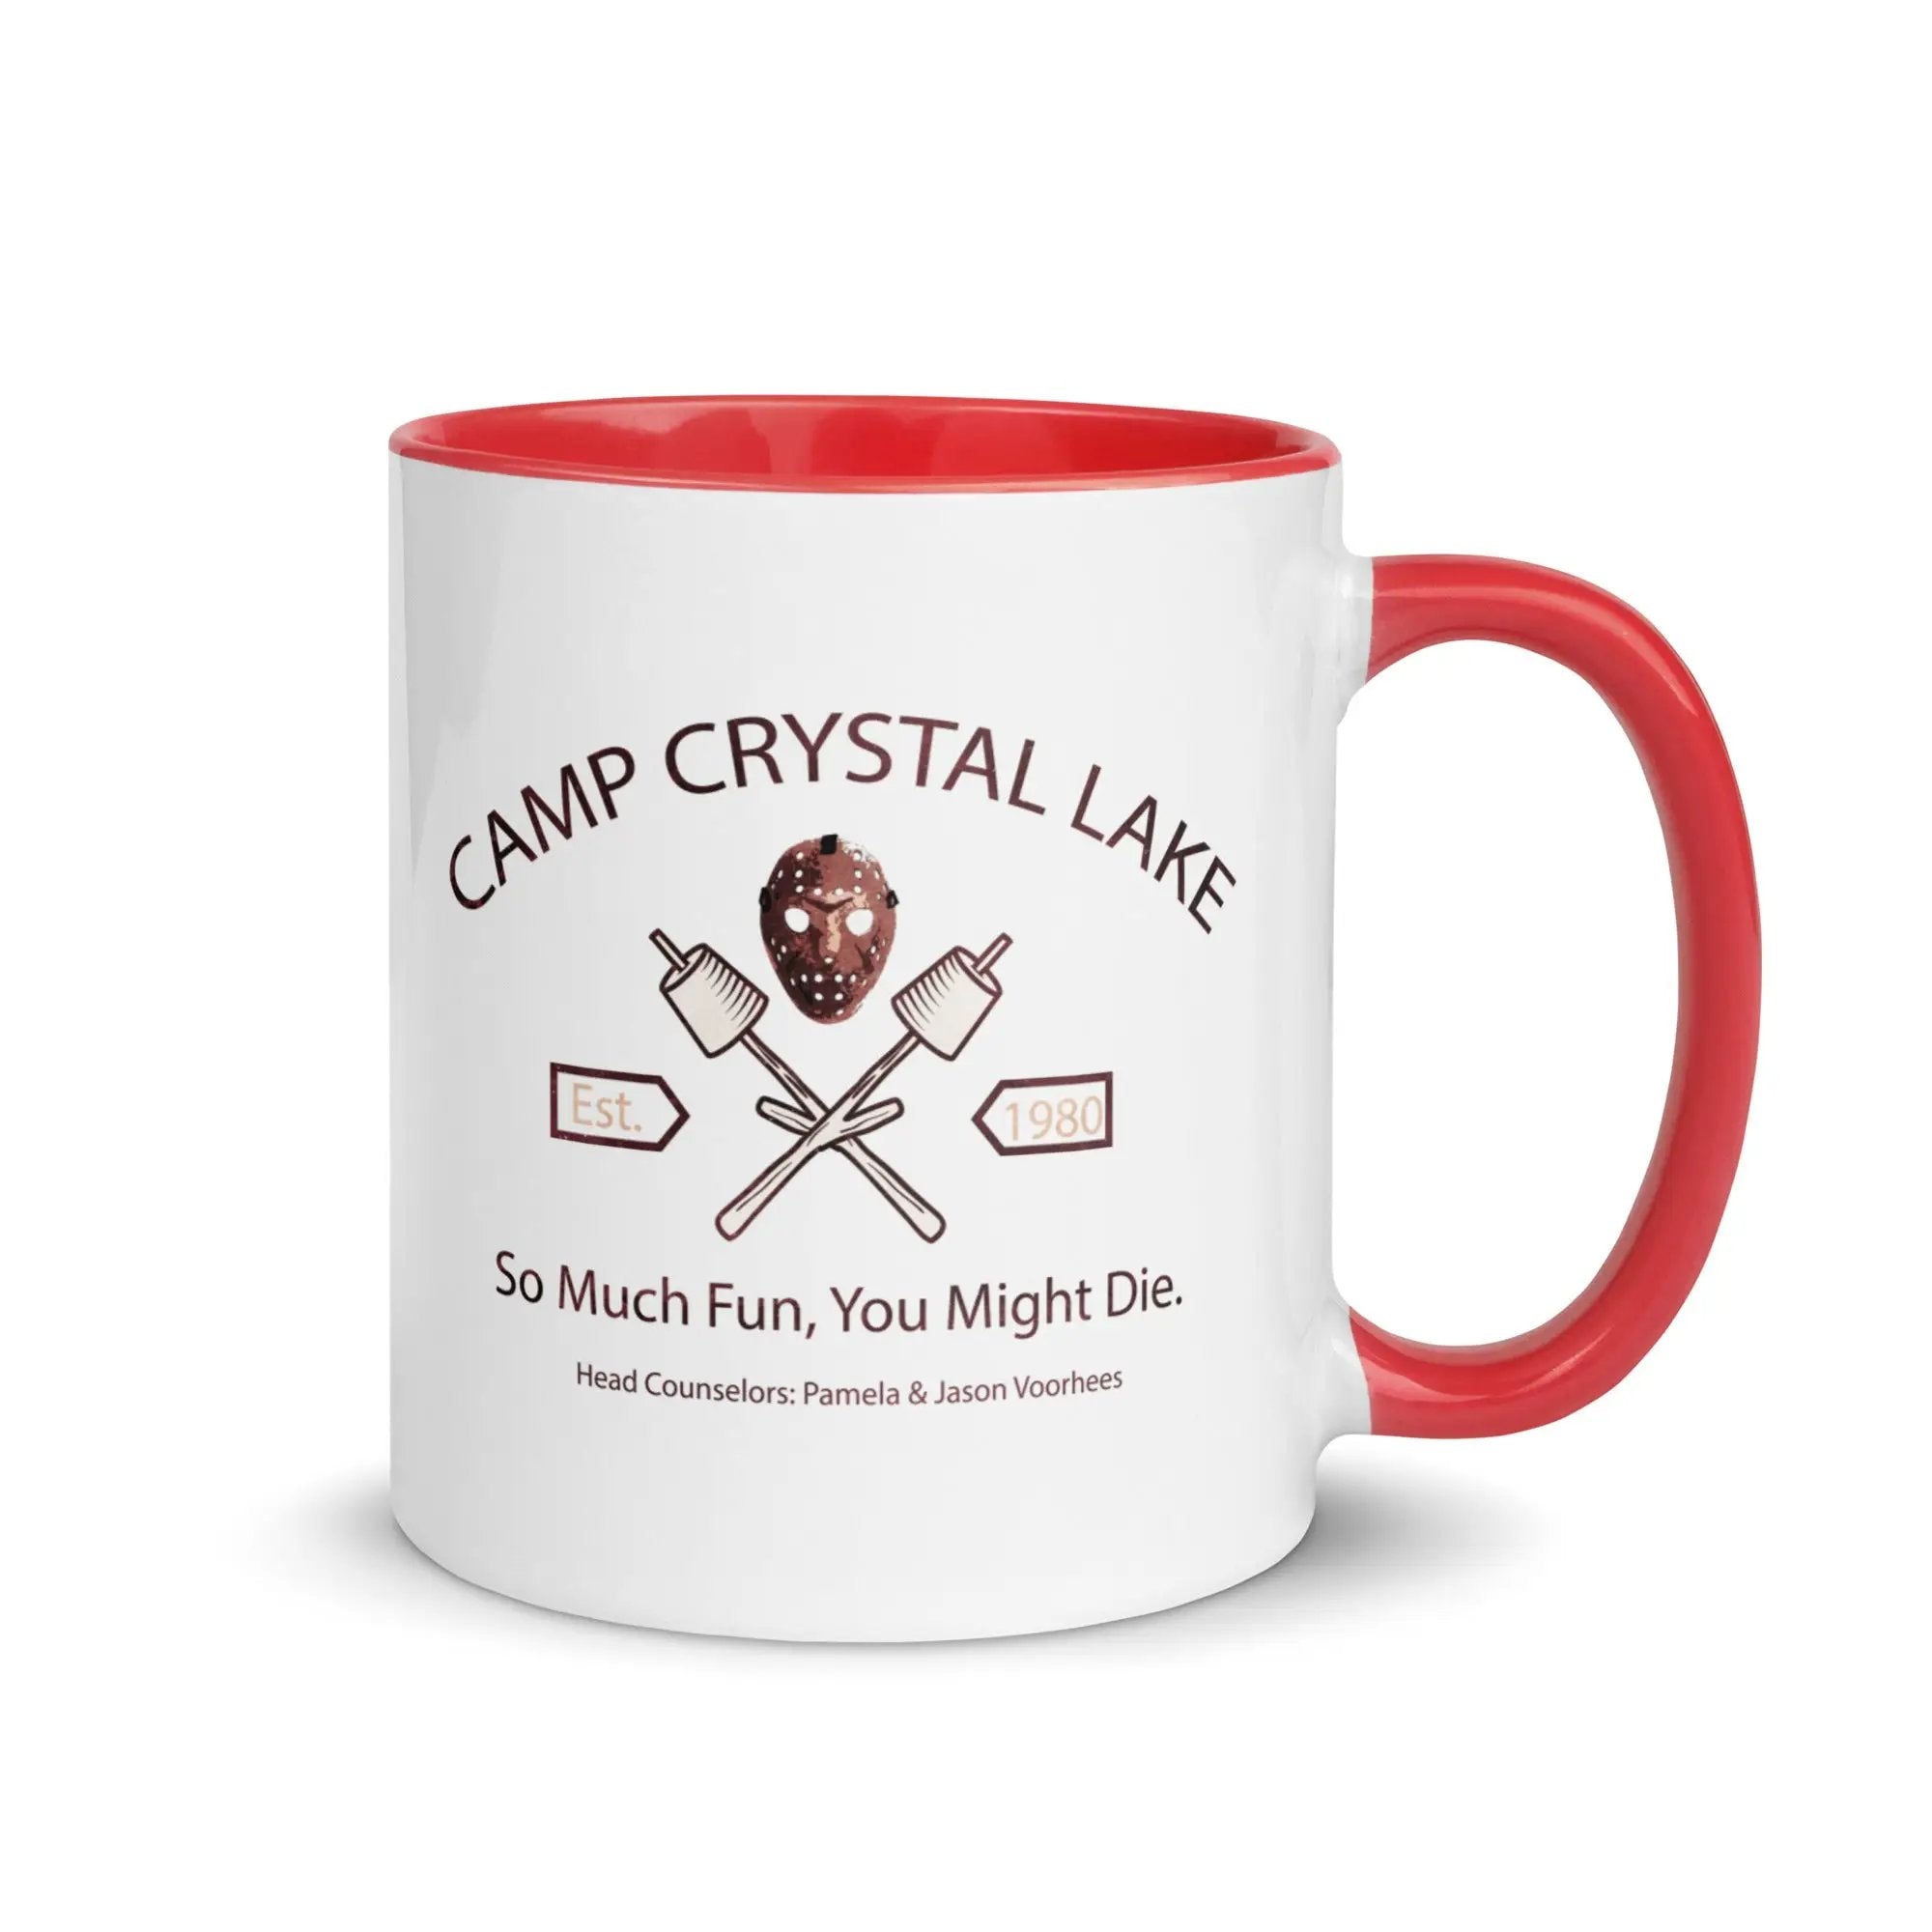 a red and white coffee mug with a camp crystal lake logo